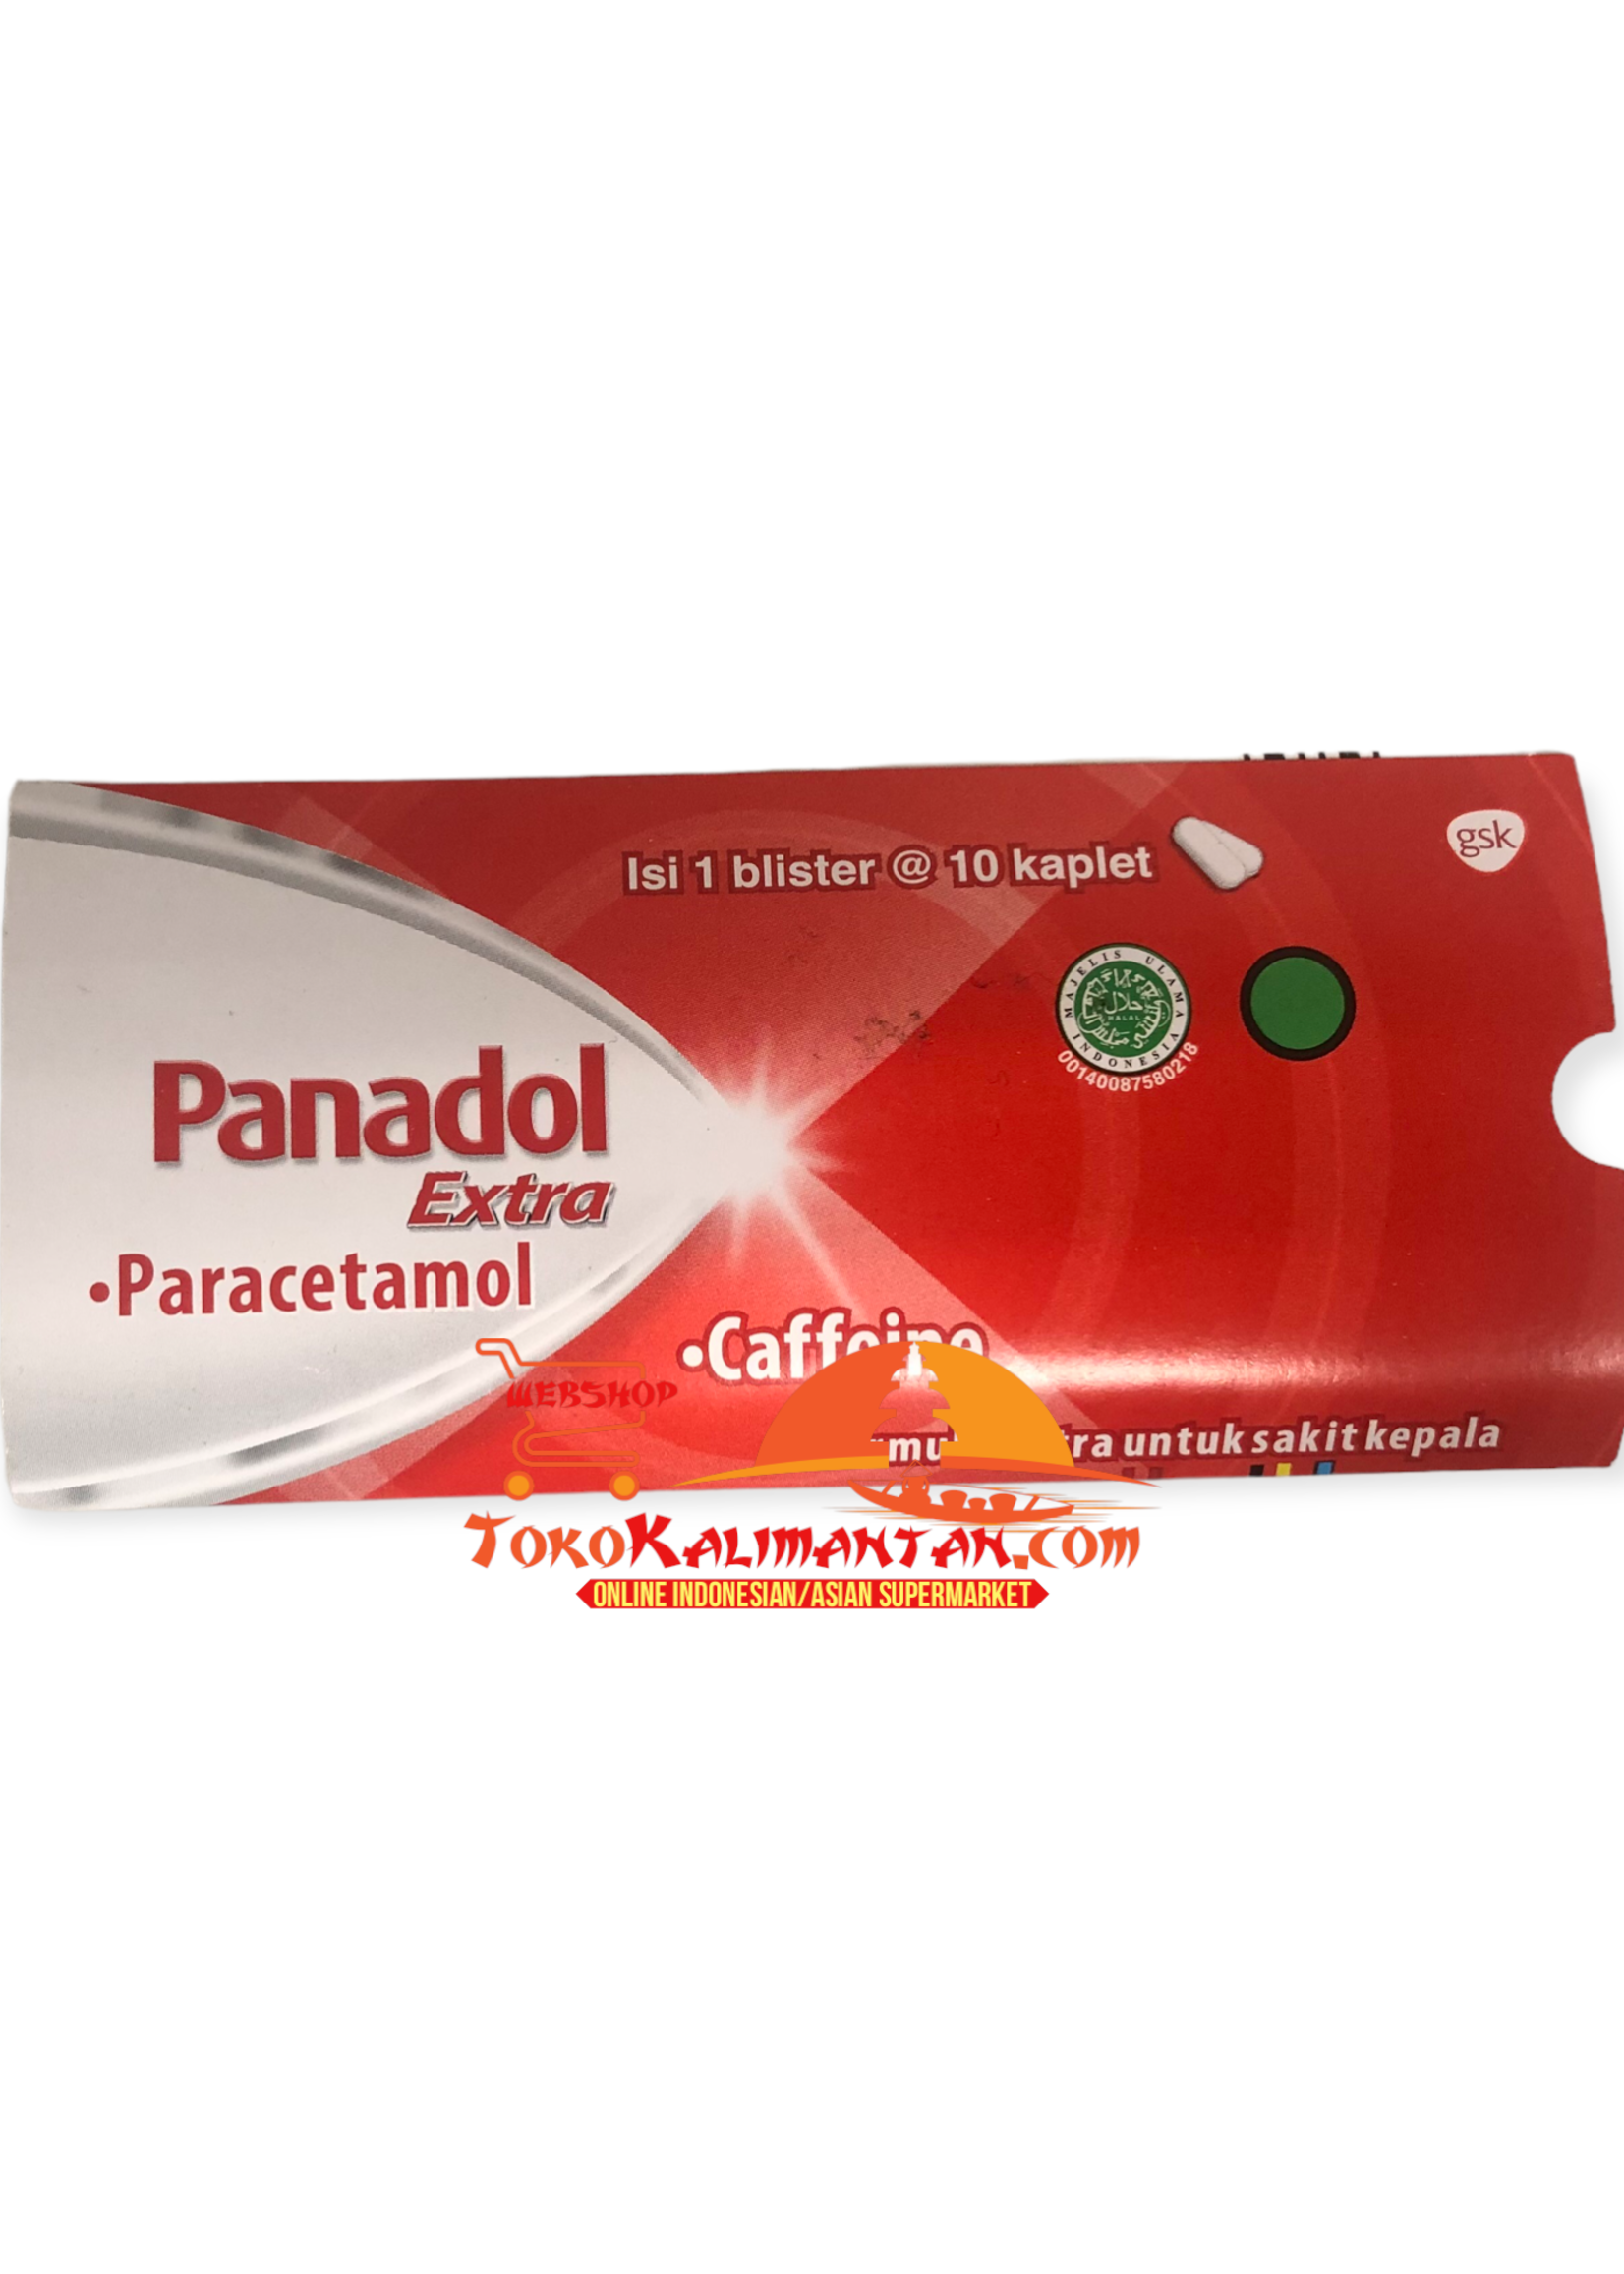 Panadol Panadol - paracetamol caffeine versi Indonesia (merah)